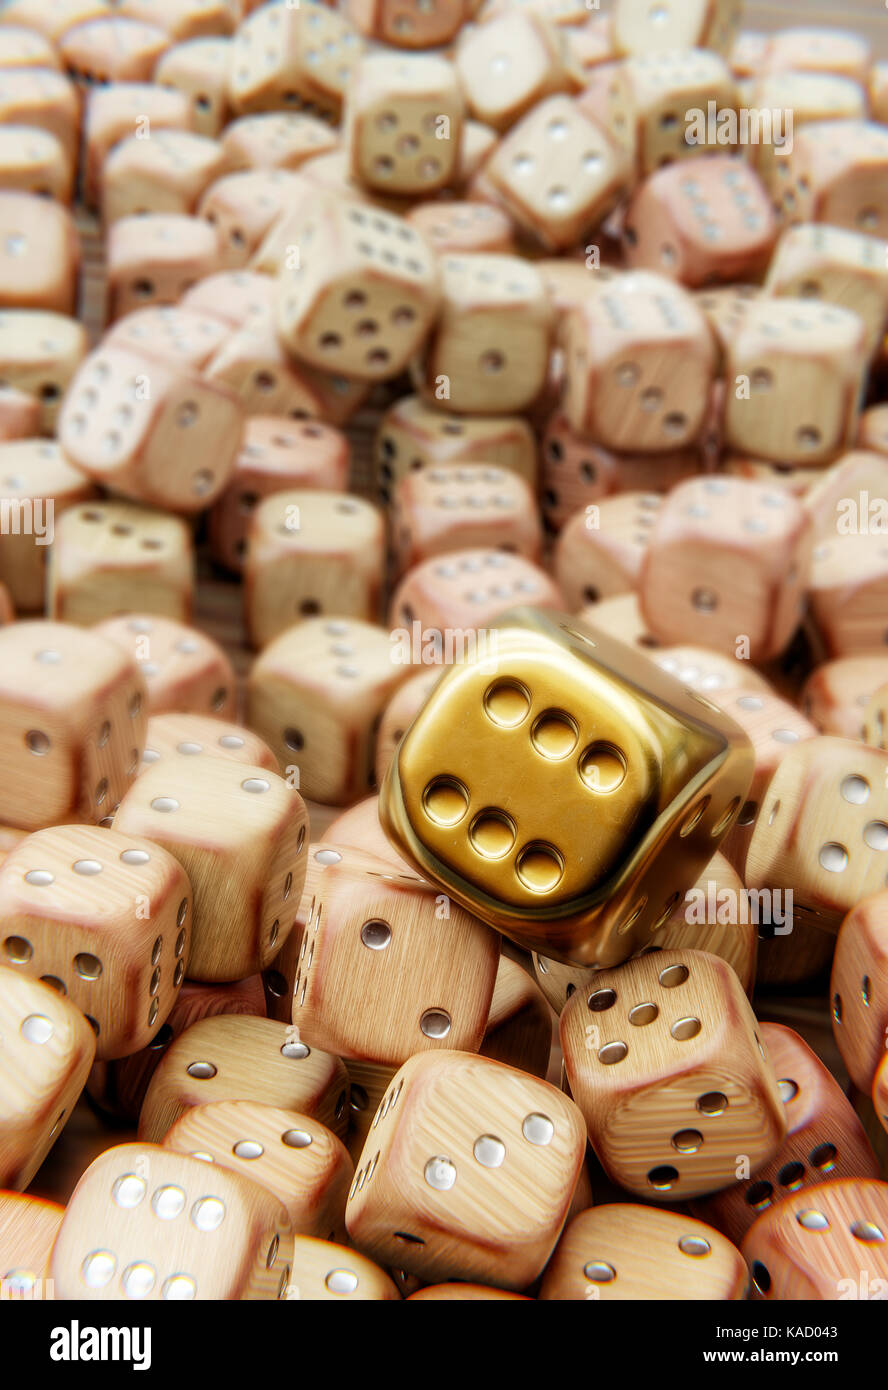 Unique big golden dice, many wooden dice Stock Photo